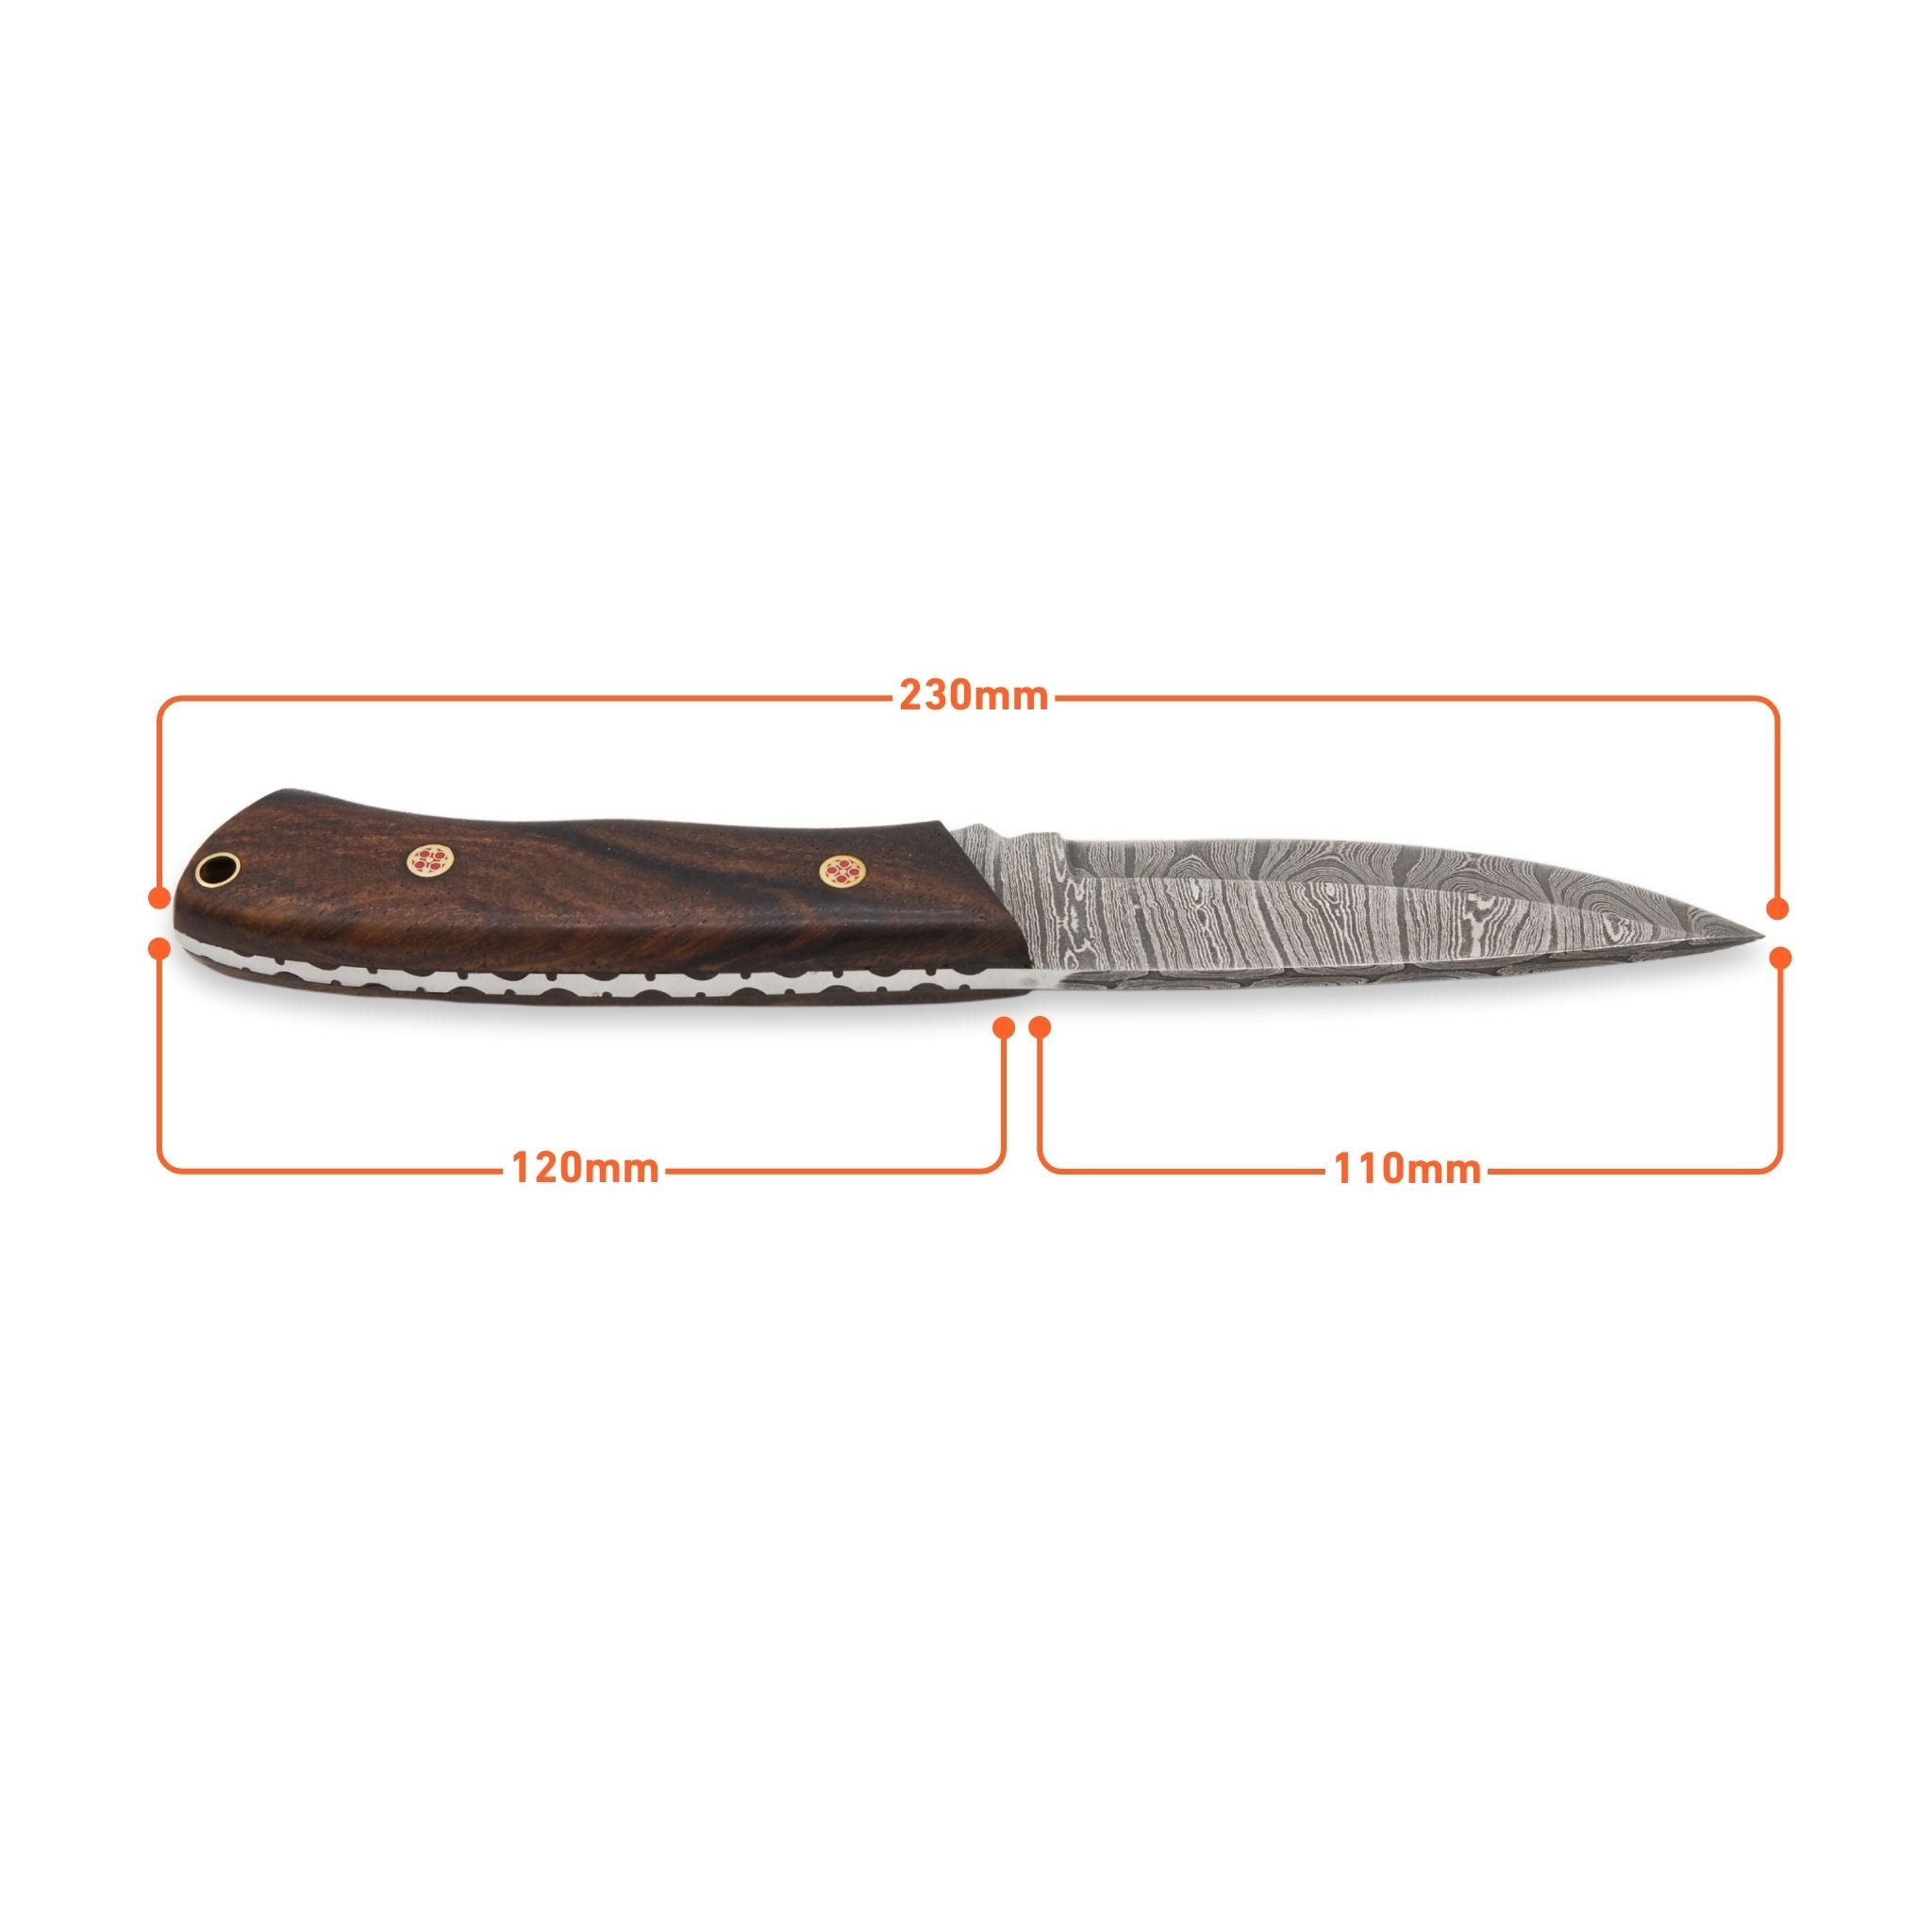 Outback Nomad II, Handmade Knife